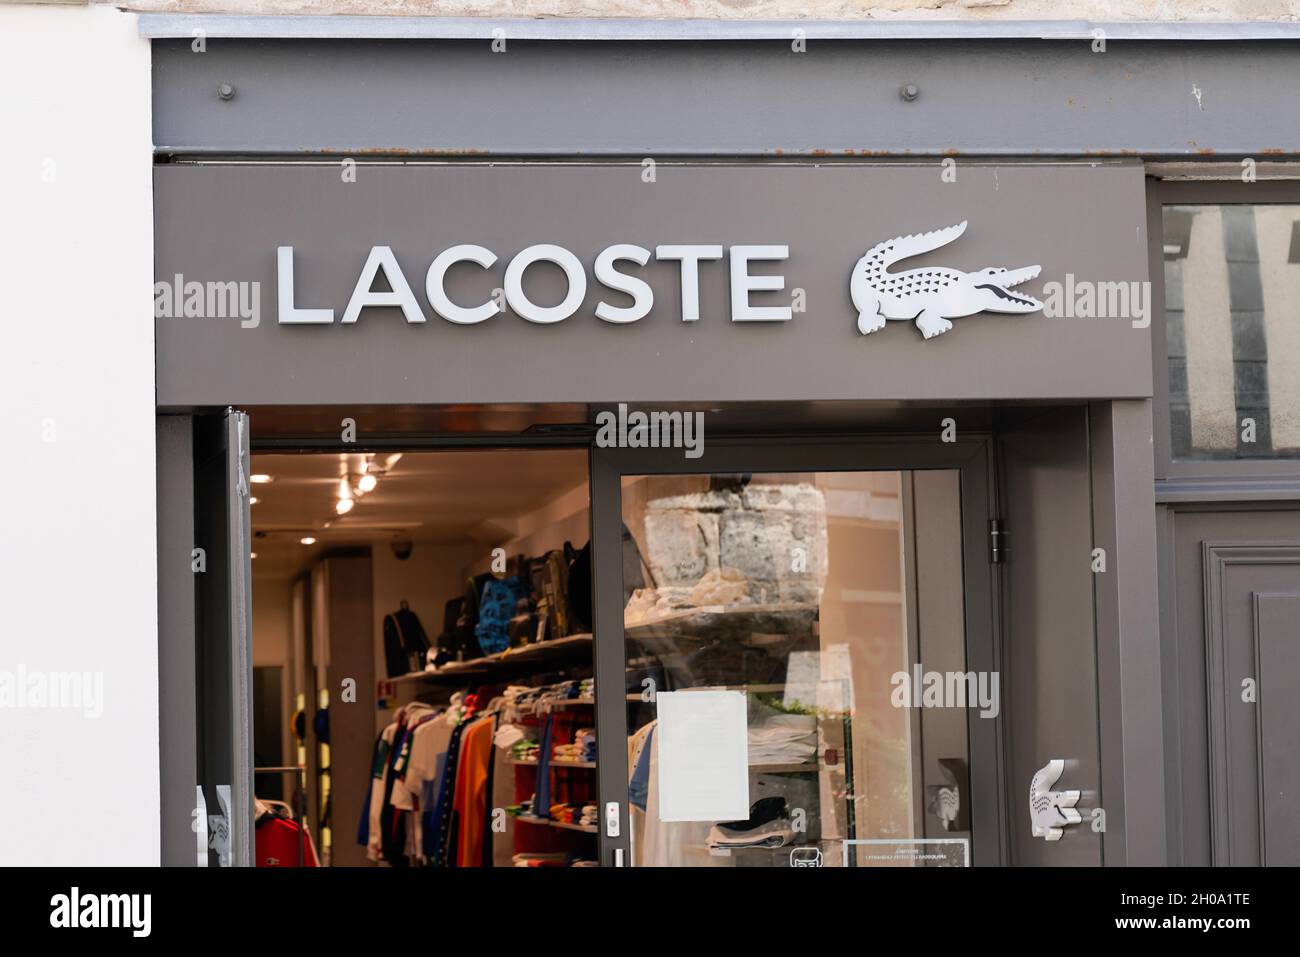 toulouse , occitanie France - 06 25 2021 : Lacoste crocodile sign text ...